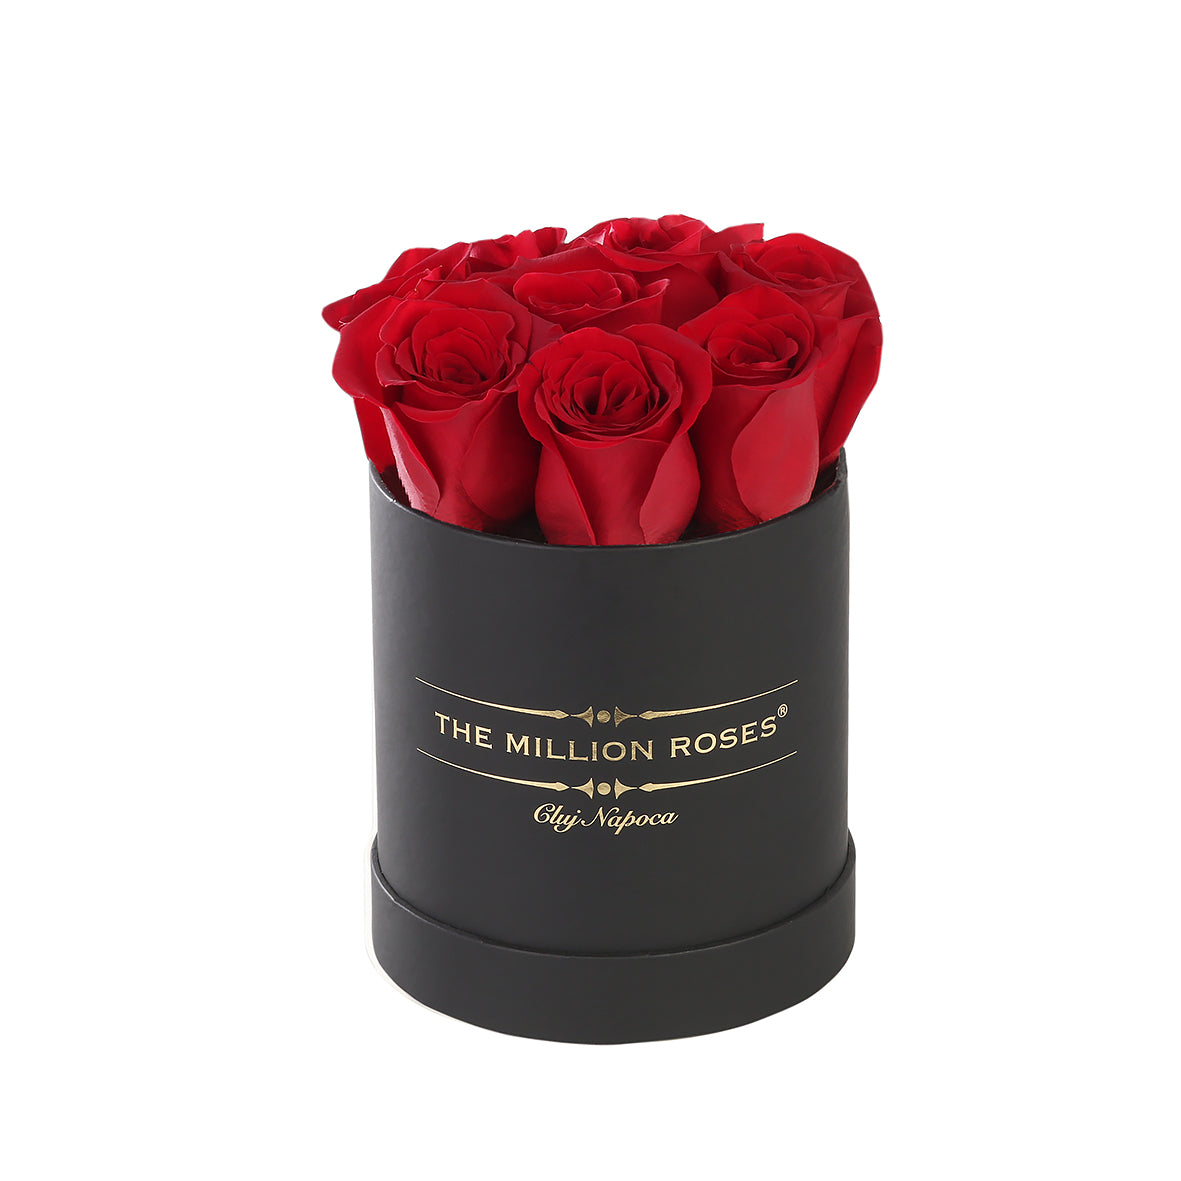 buchete trandafiri in cutie, buchete trandafiri naturali in cutie, trandafiri naturali, trandafiri rosii